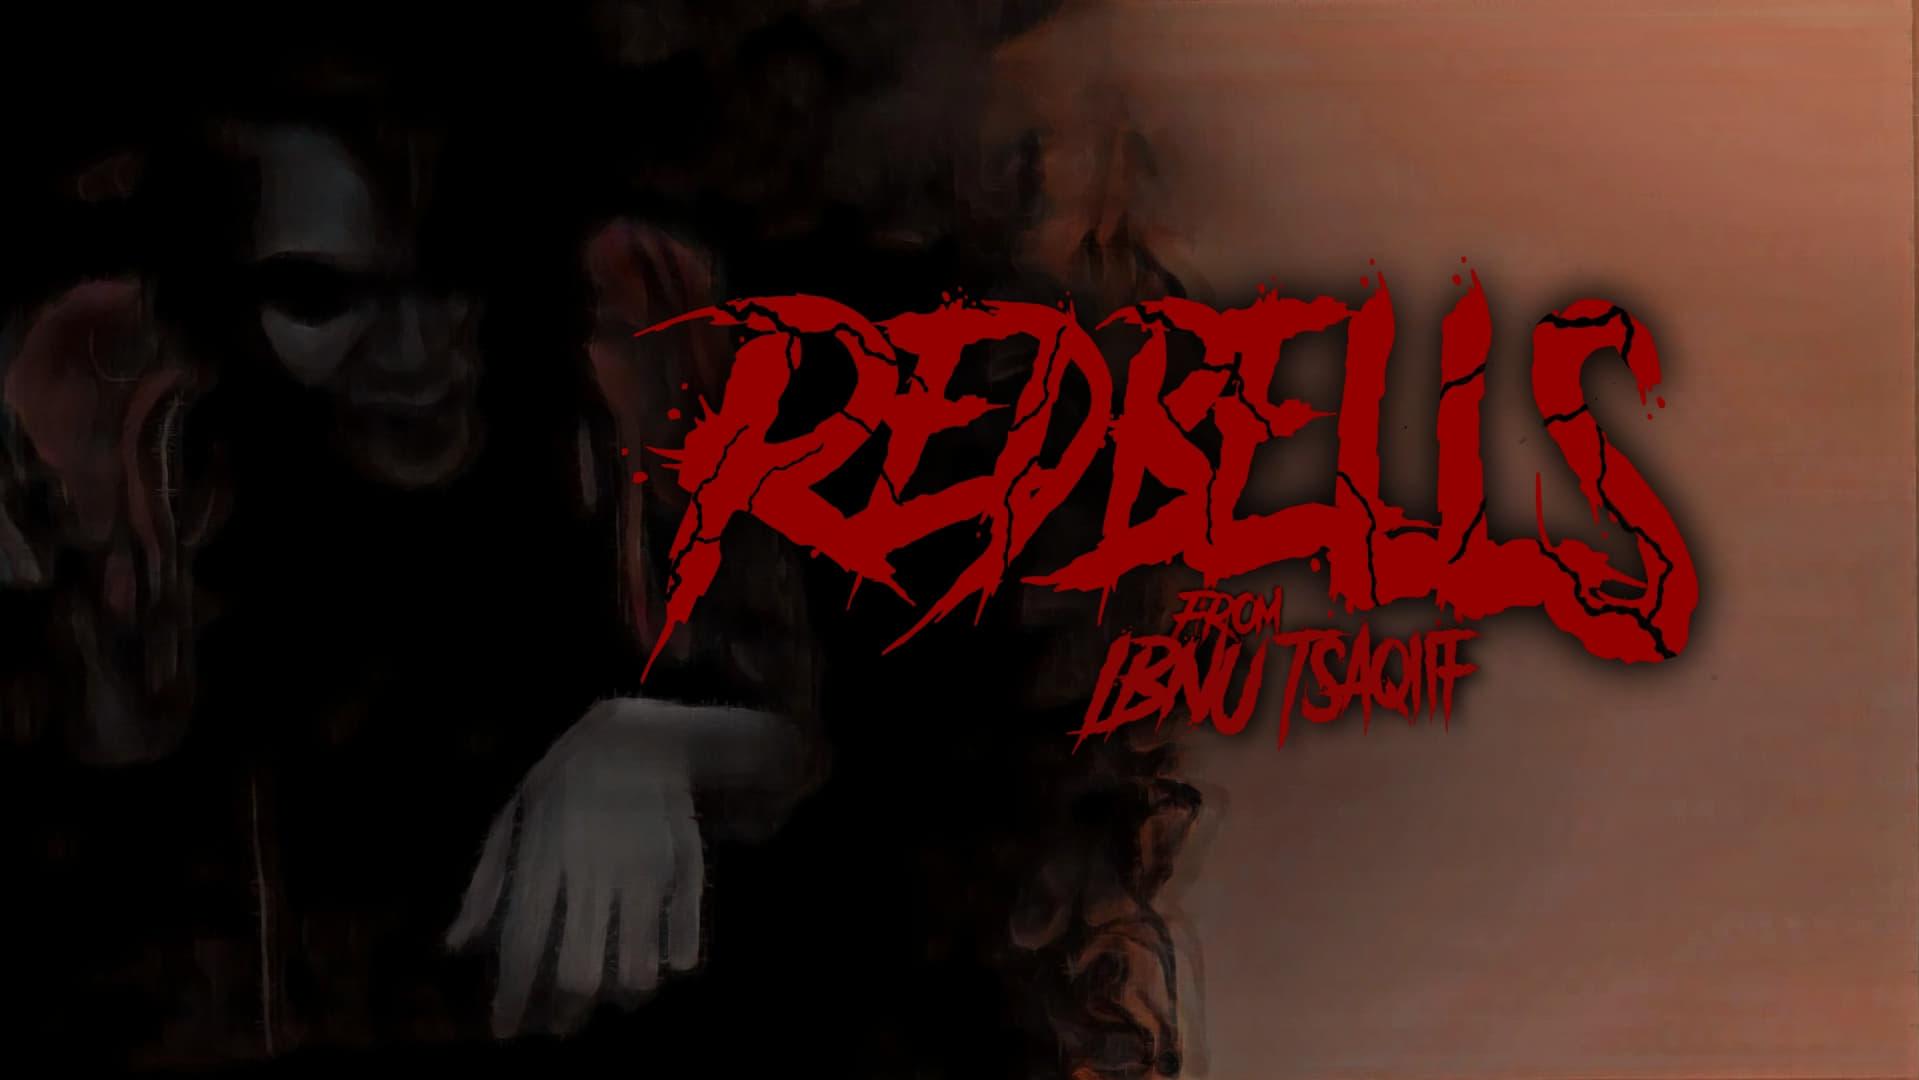 Redbells backdrop